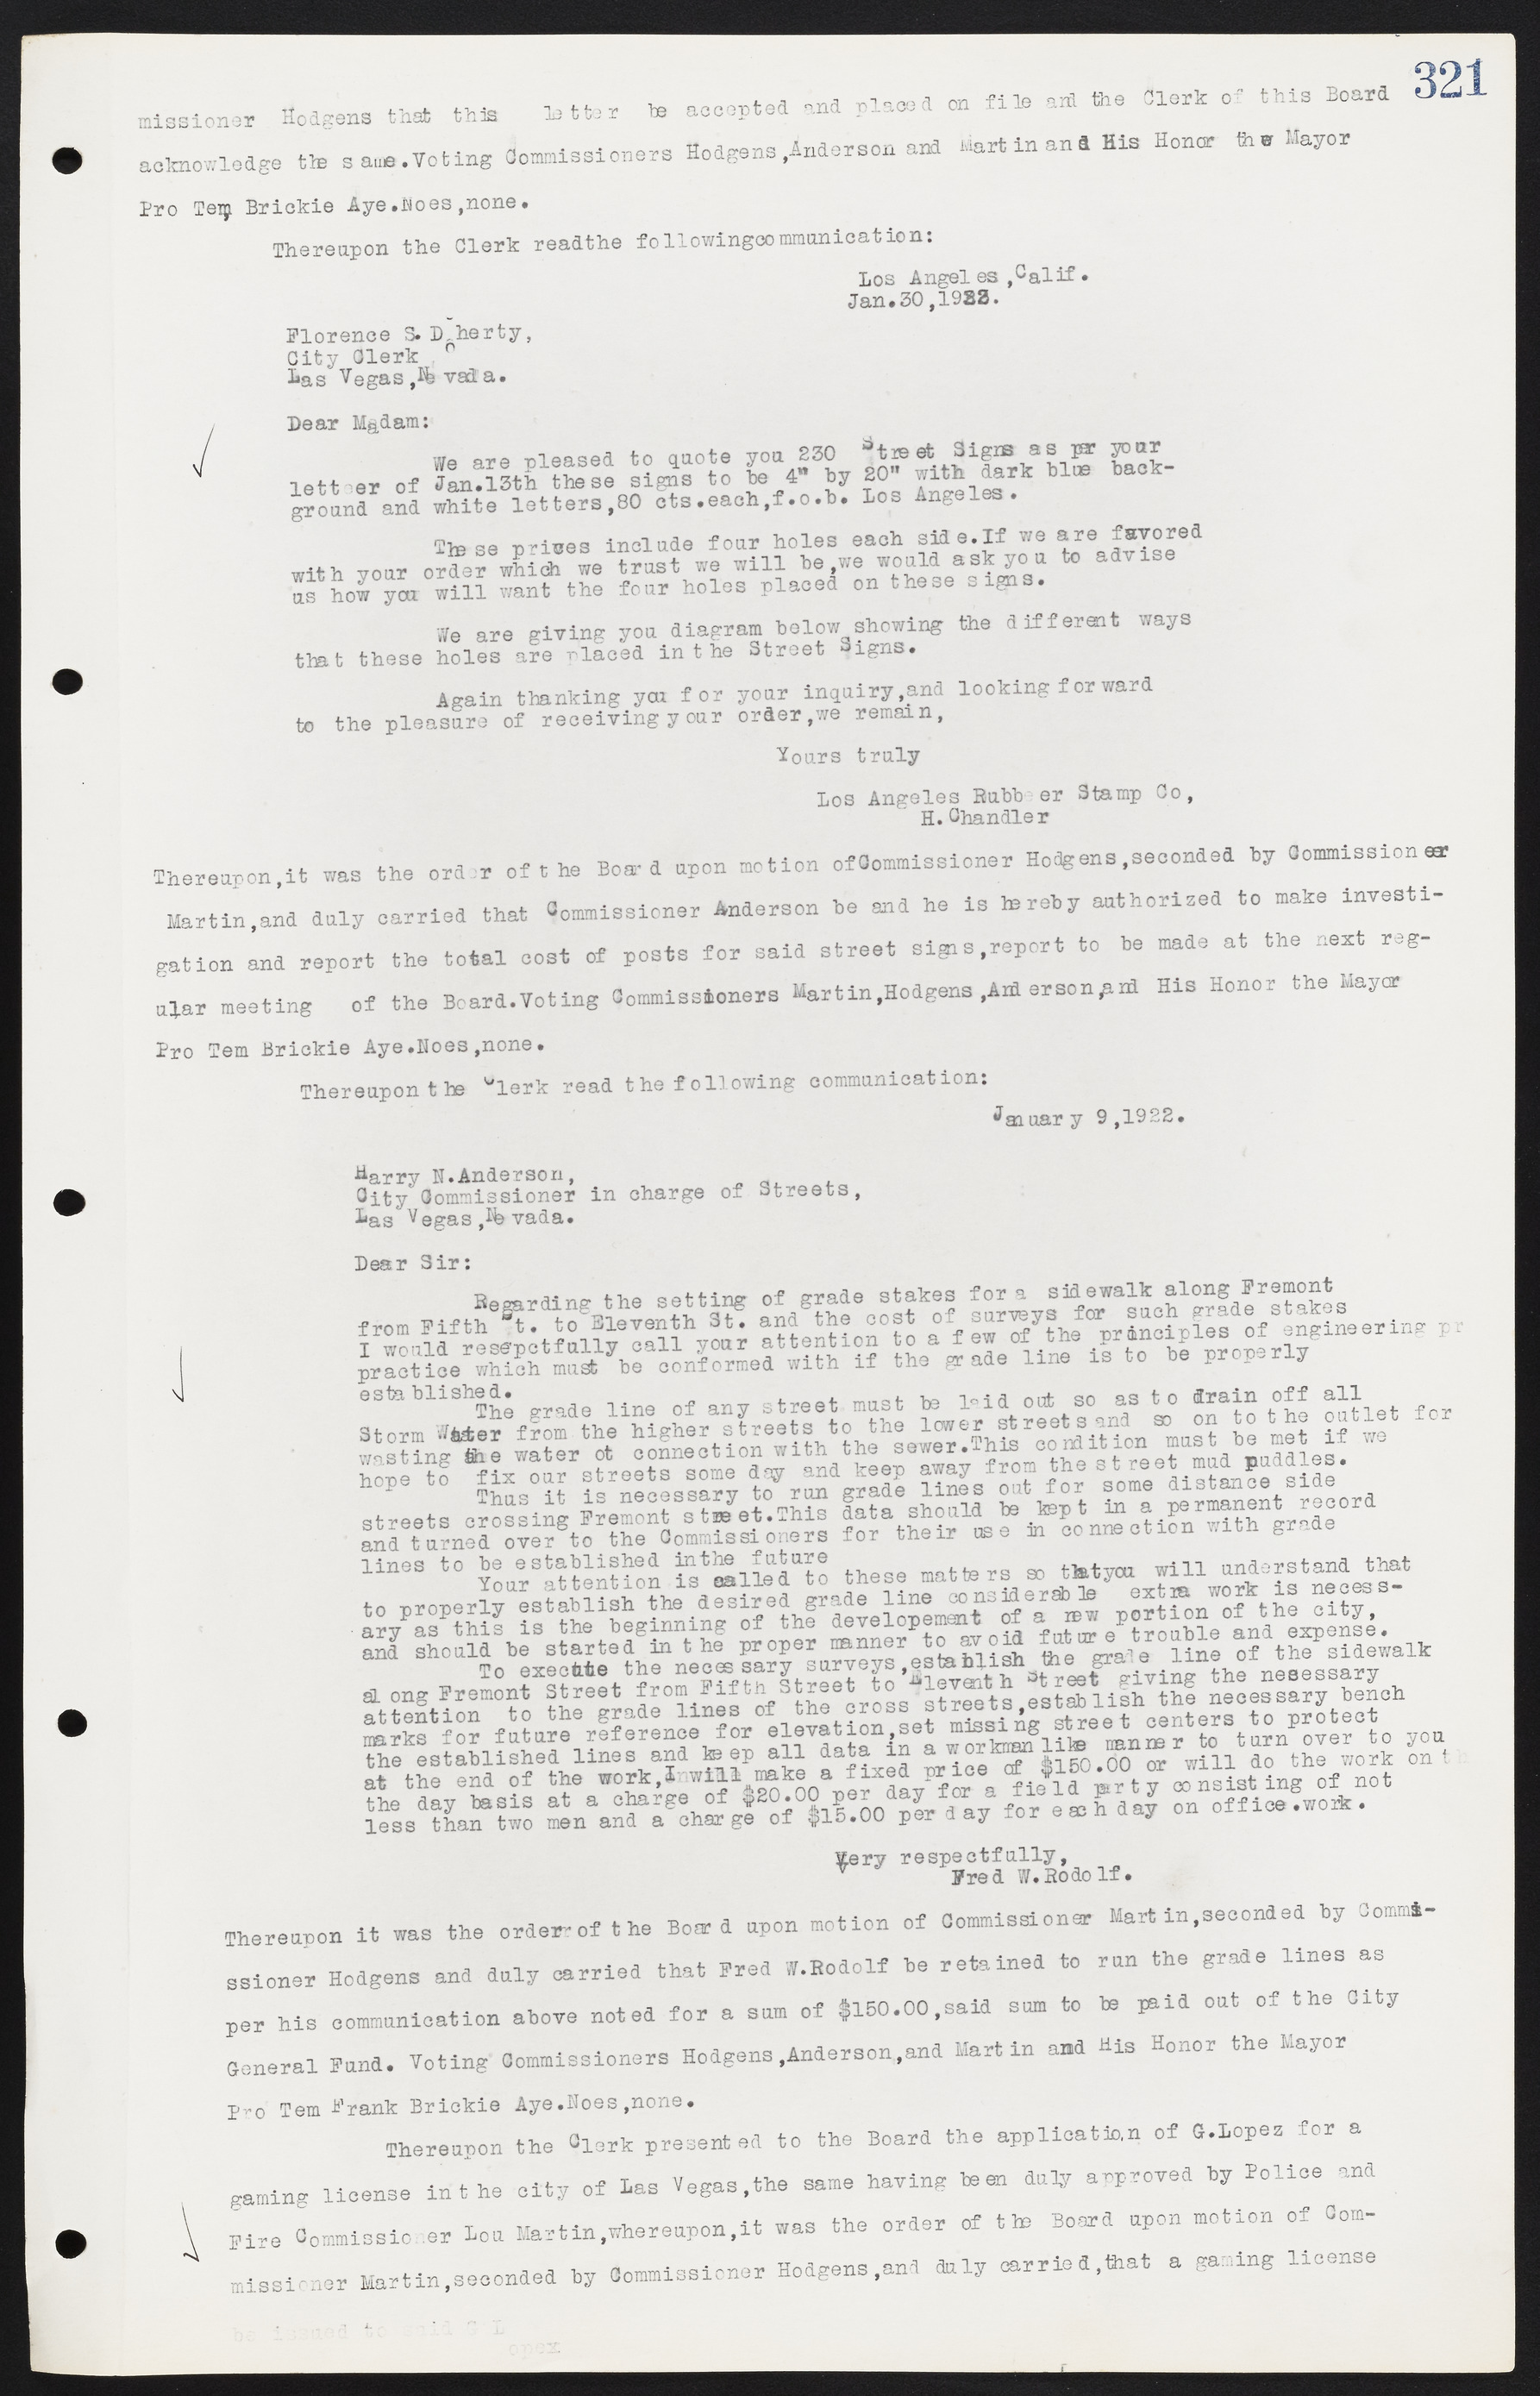 Las Vegas City Commission Minutes, June 22, 1911 to February 7, 1922, lvc000001-337